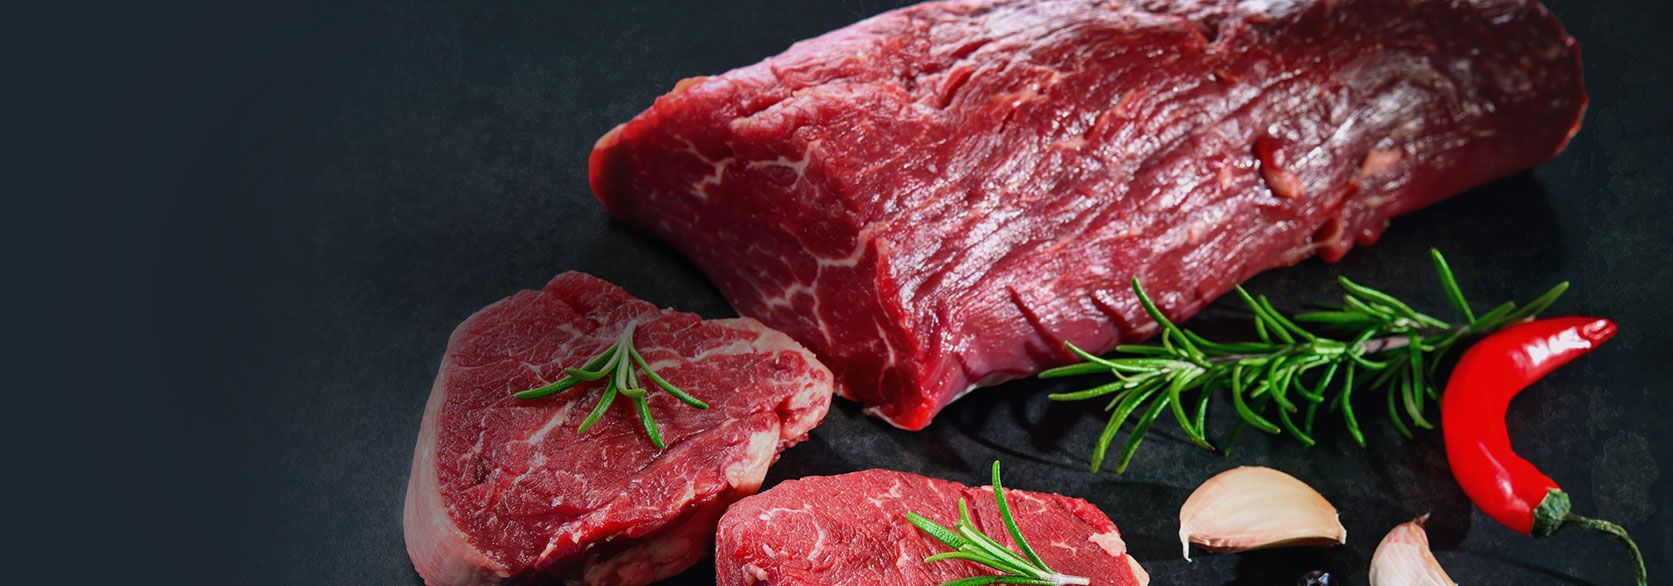 Pure organic fresh meats - A1 Freah Meats.